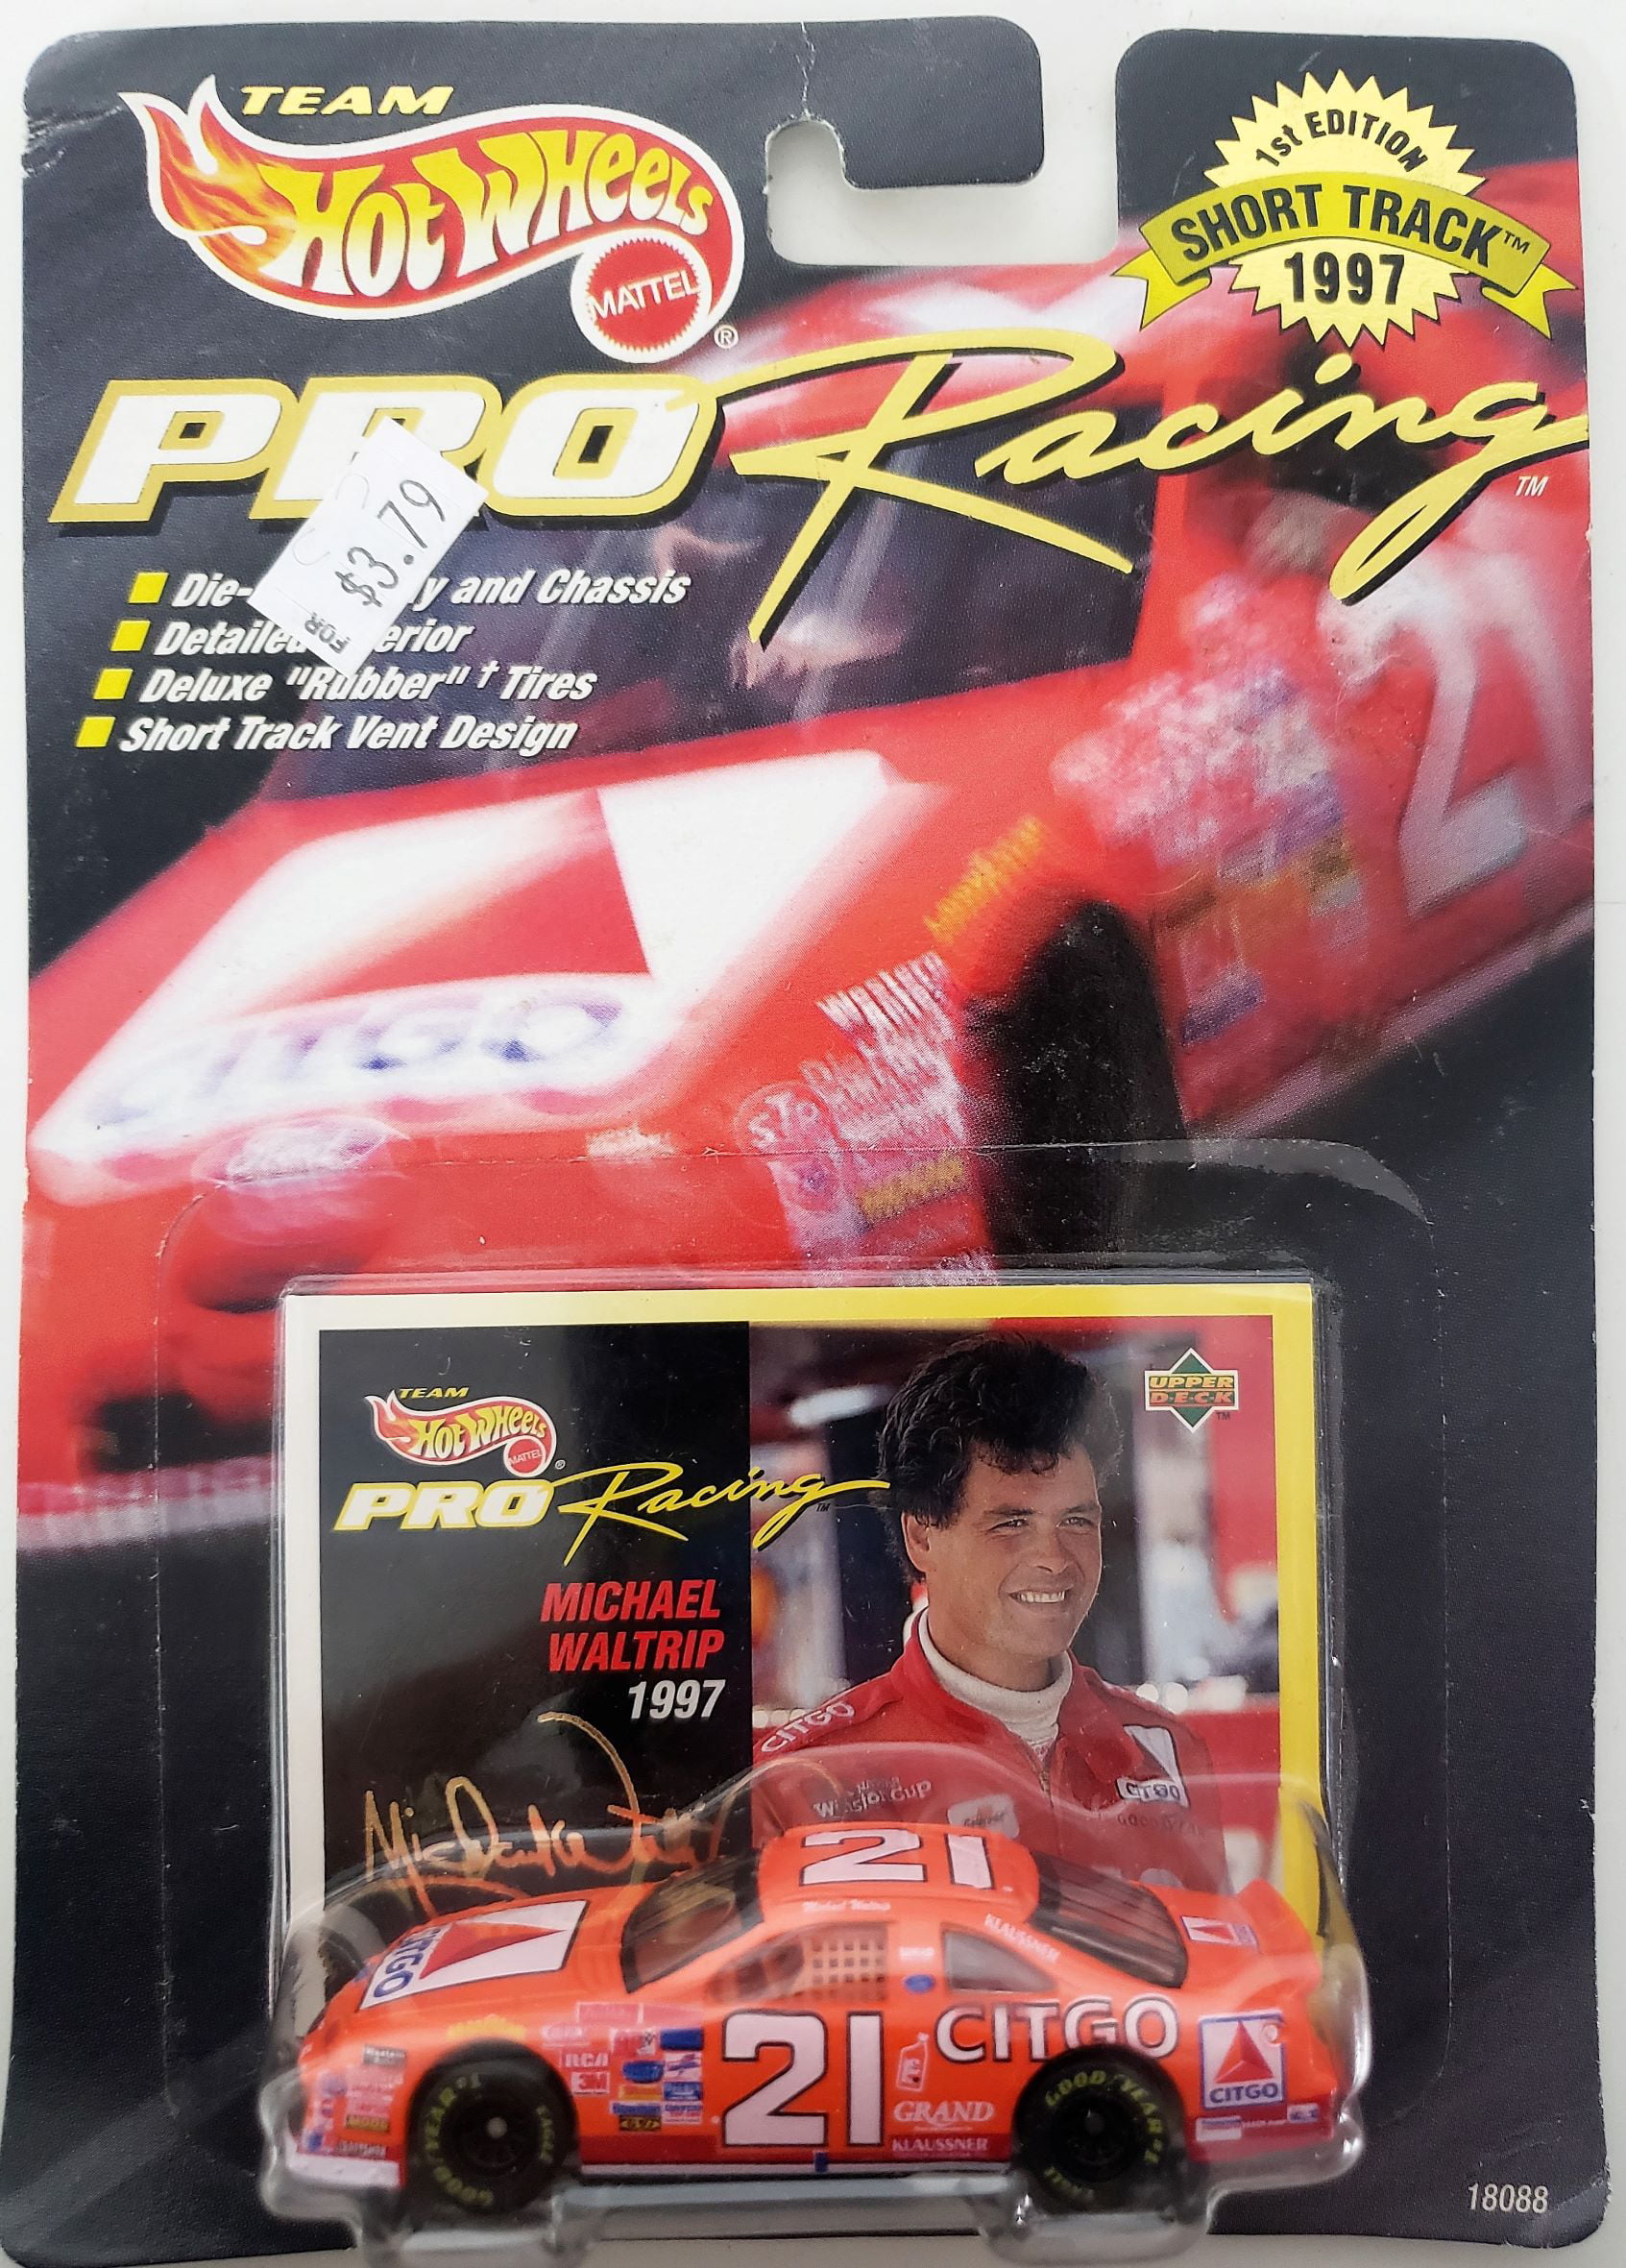 1997 Revell 1:43 Scale Diecast NASCAR Michael Waltrip Citgo Ford Thunderbird #21